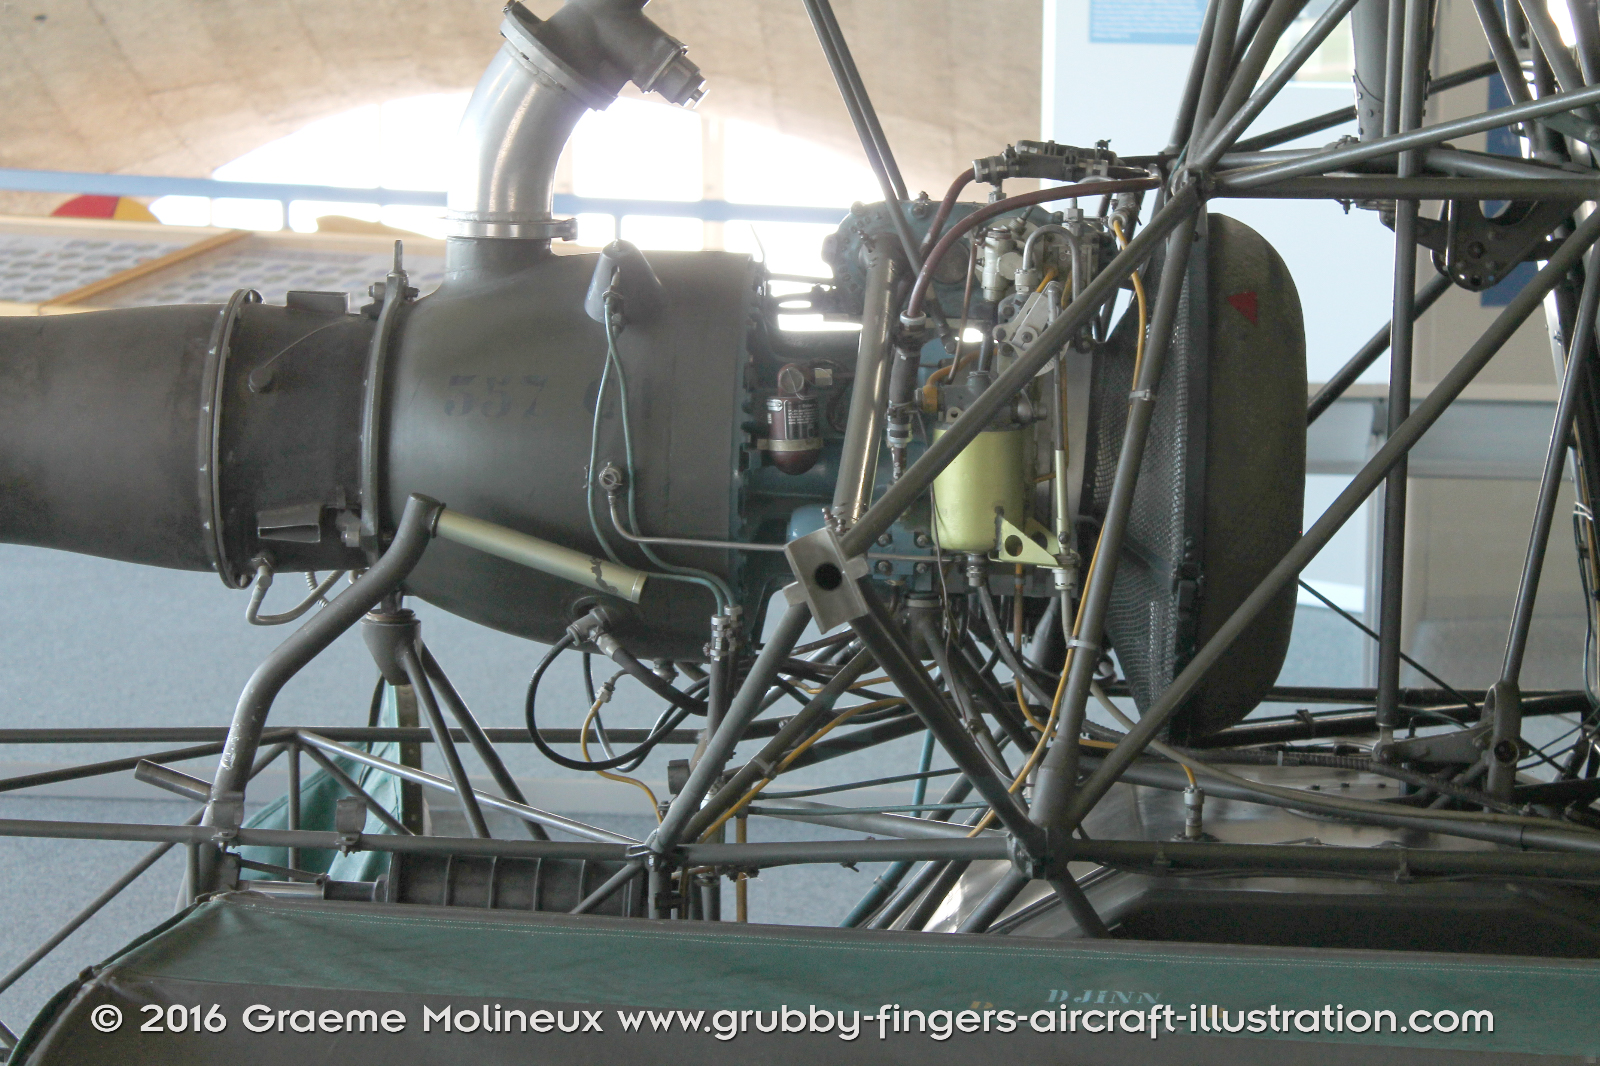 SUD_OUEST_DJINN_V-23_Swiss_Air_Force_Museum_2015_22_GrubbyFingers